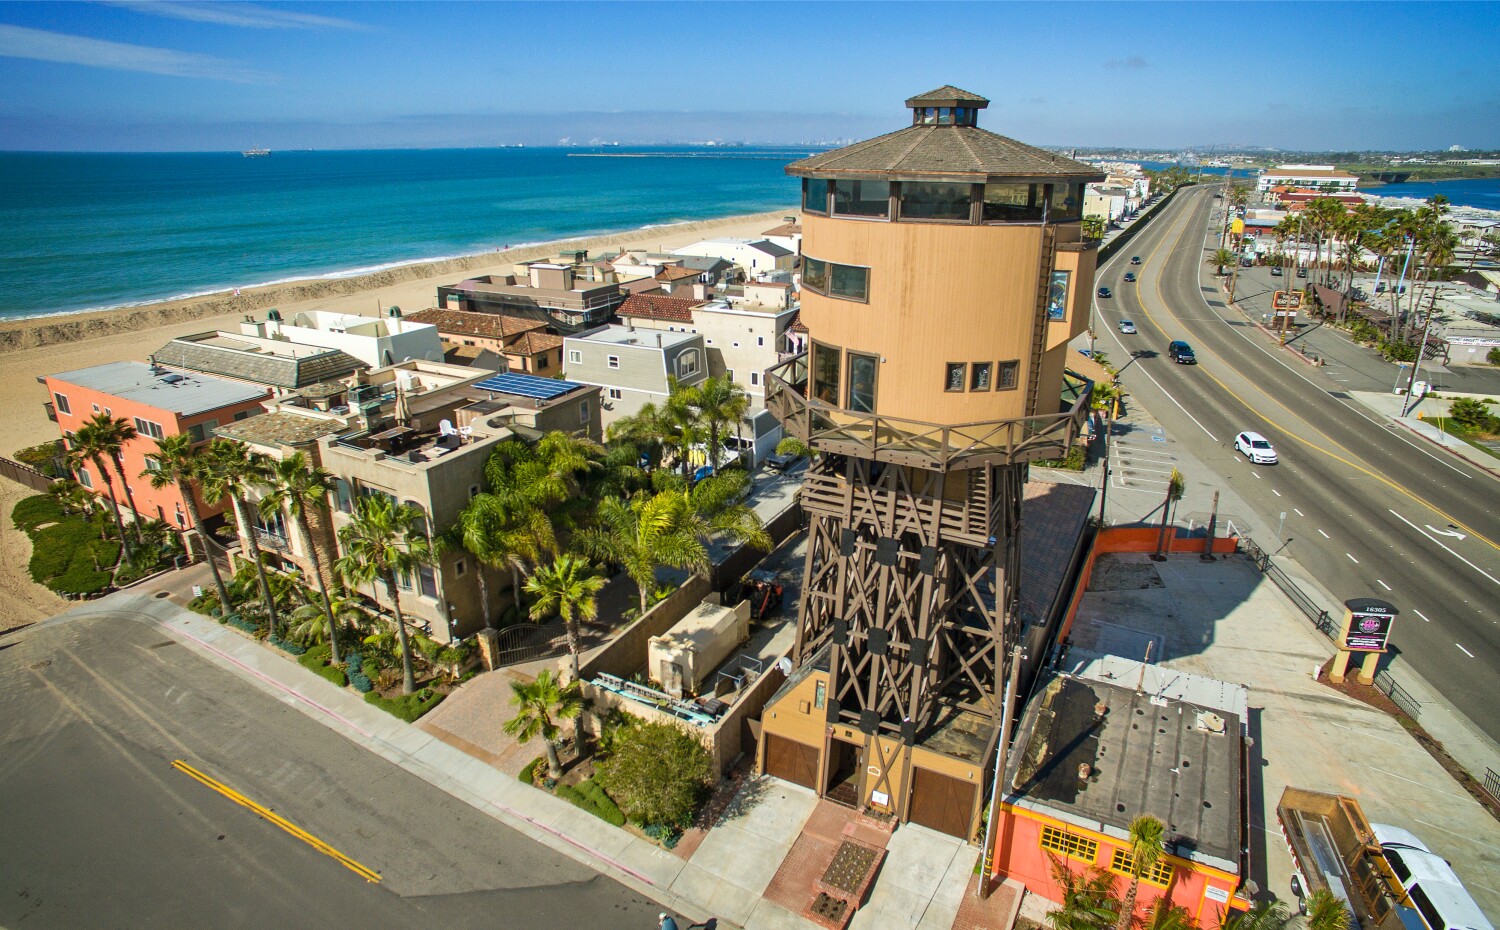 The Sunset Beach water tower, a local landmark, seeks $4.95 million